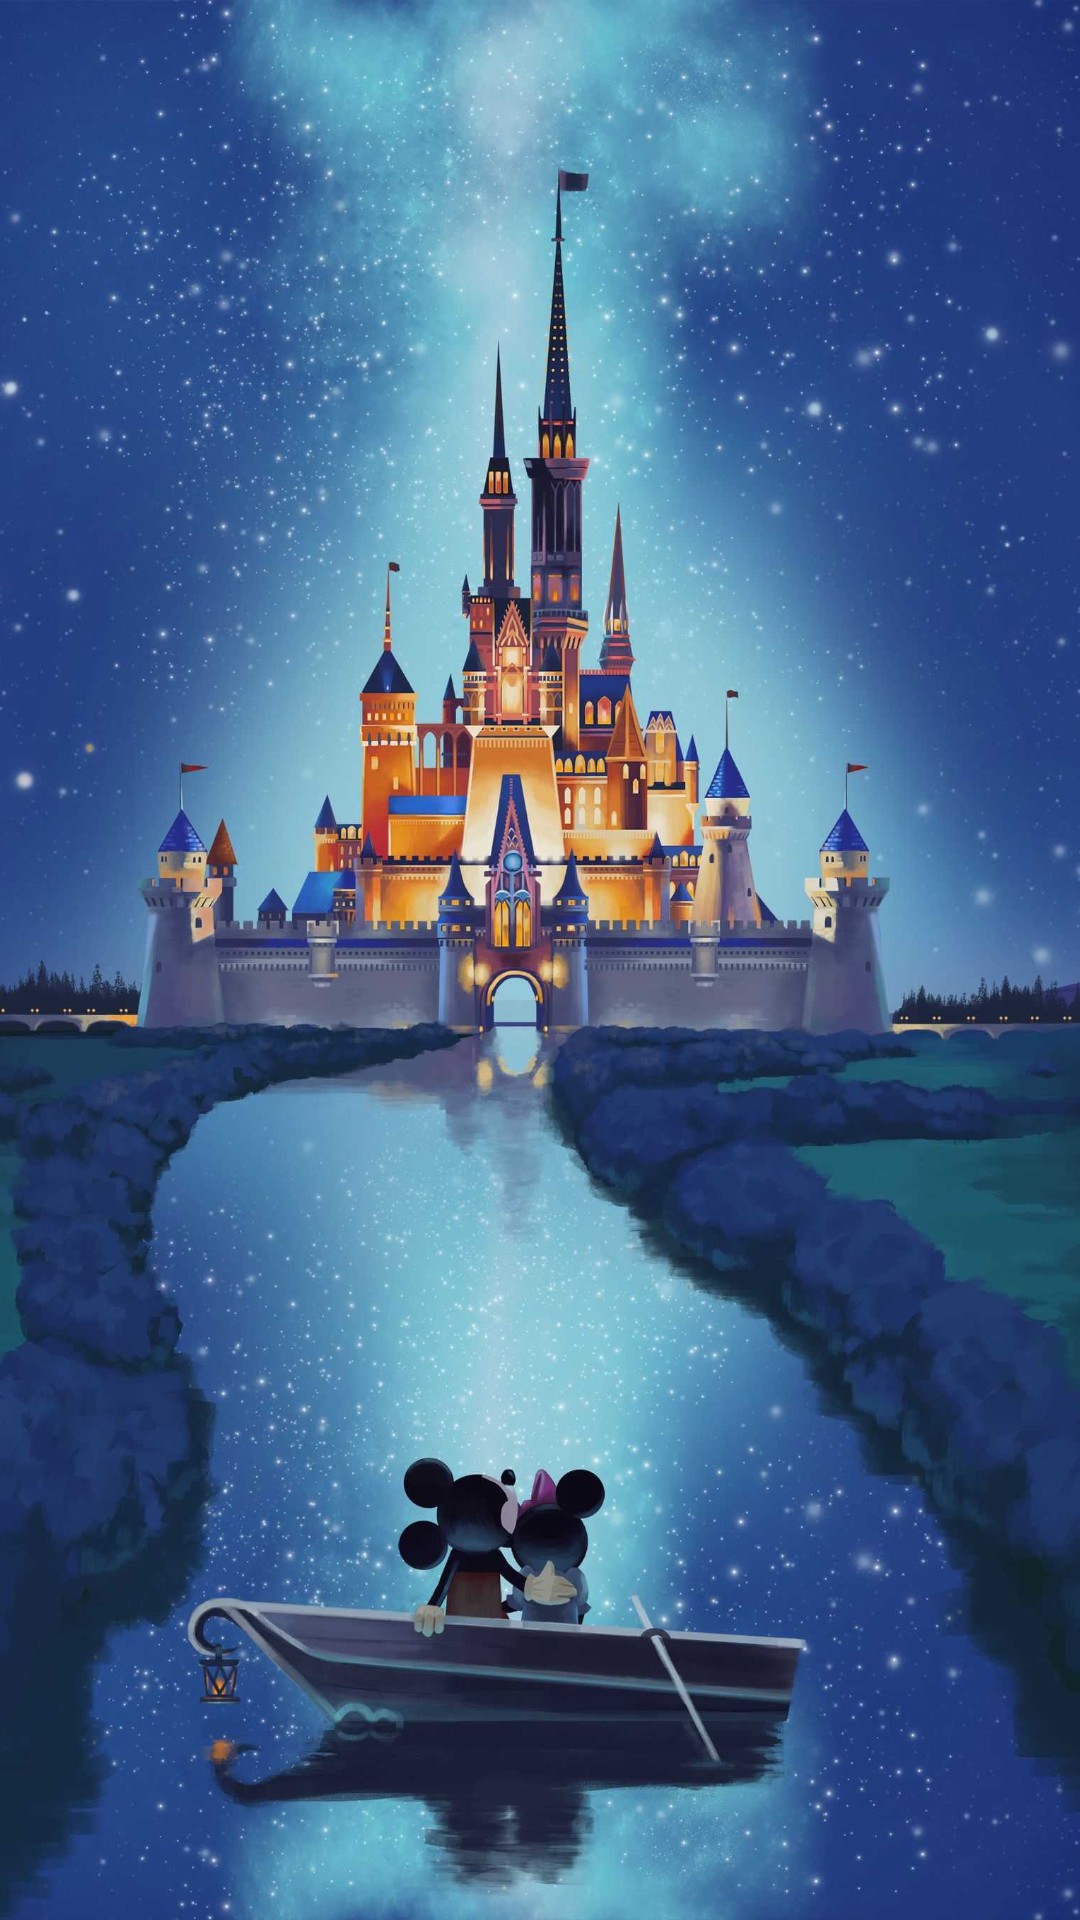 Disney Wallpapers - Top 34 Best Disney Wallpapers [ HQ ]